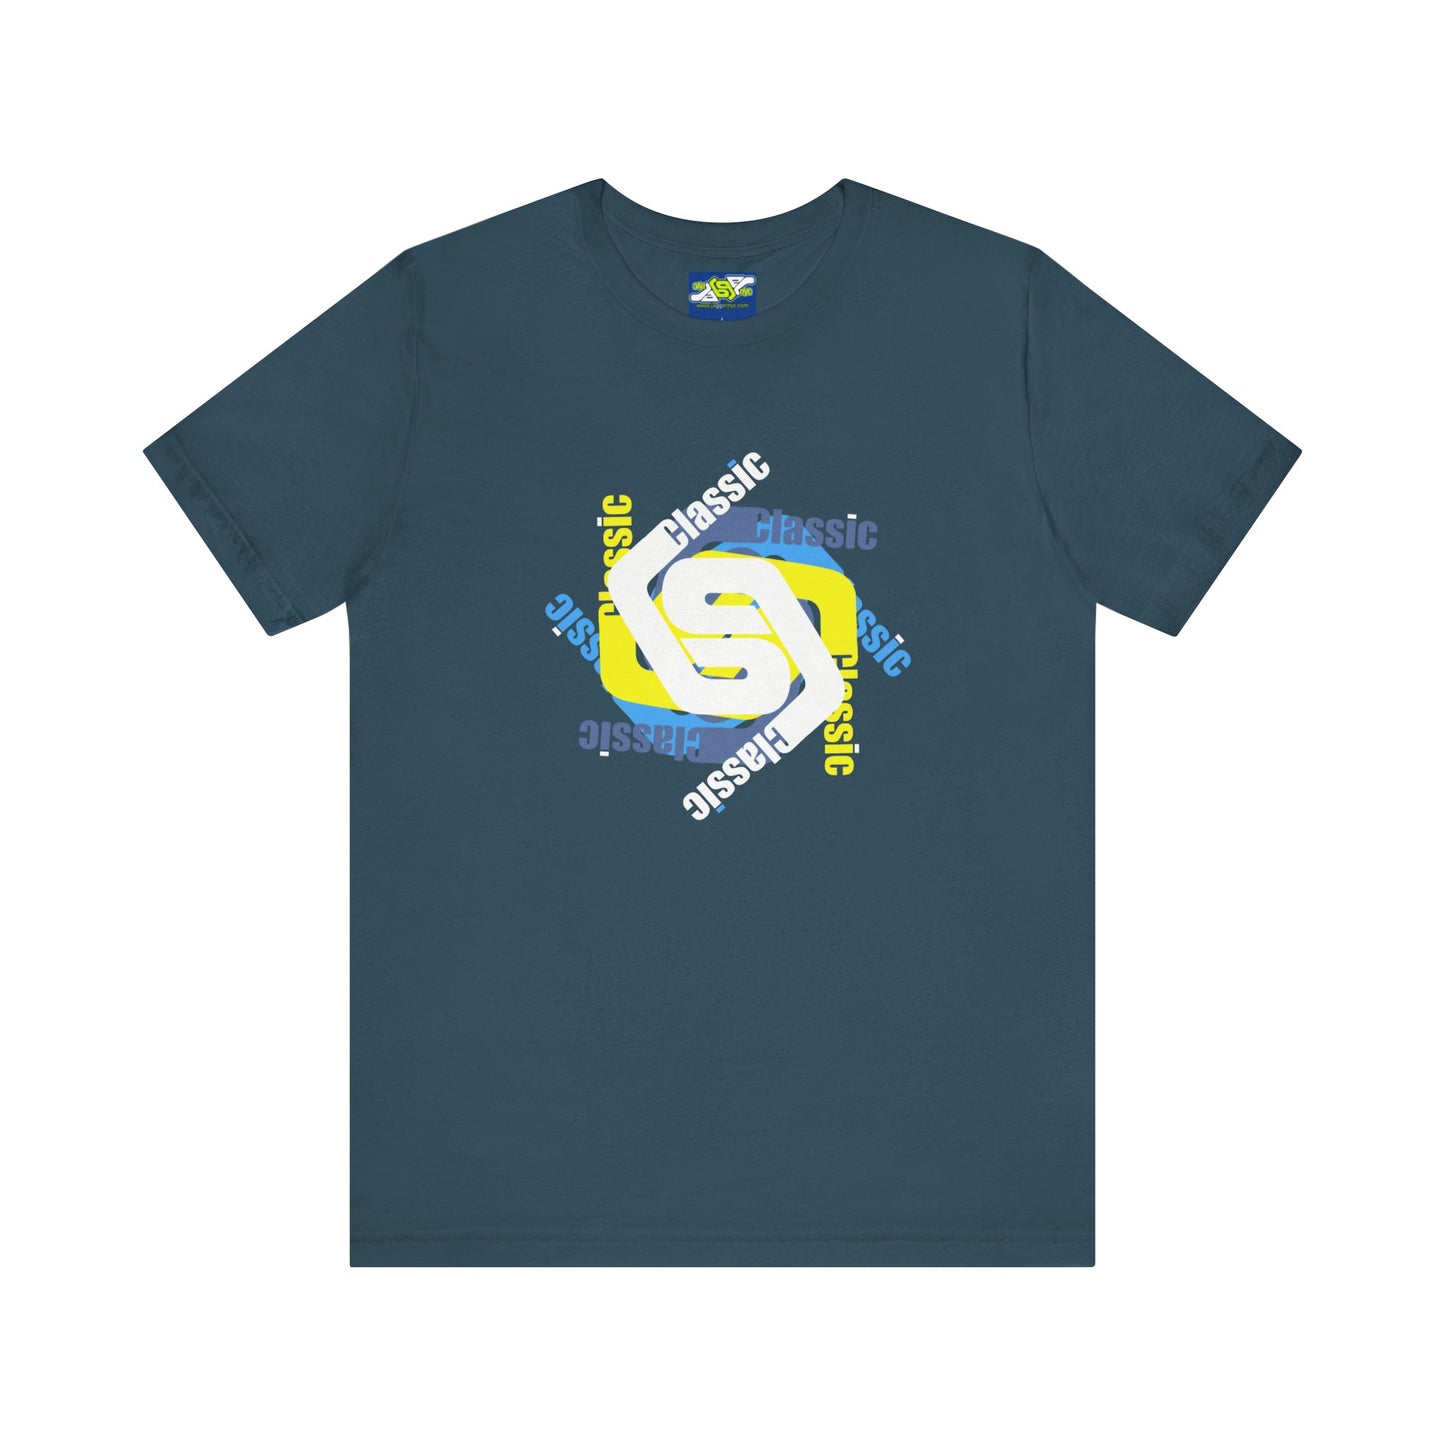 "Classic GG Logo Plus - v5" T-shirt